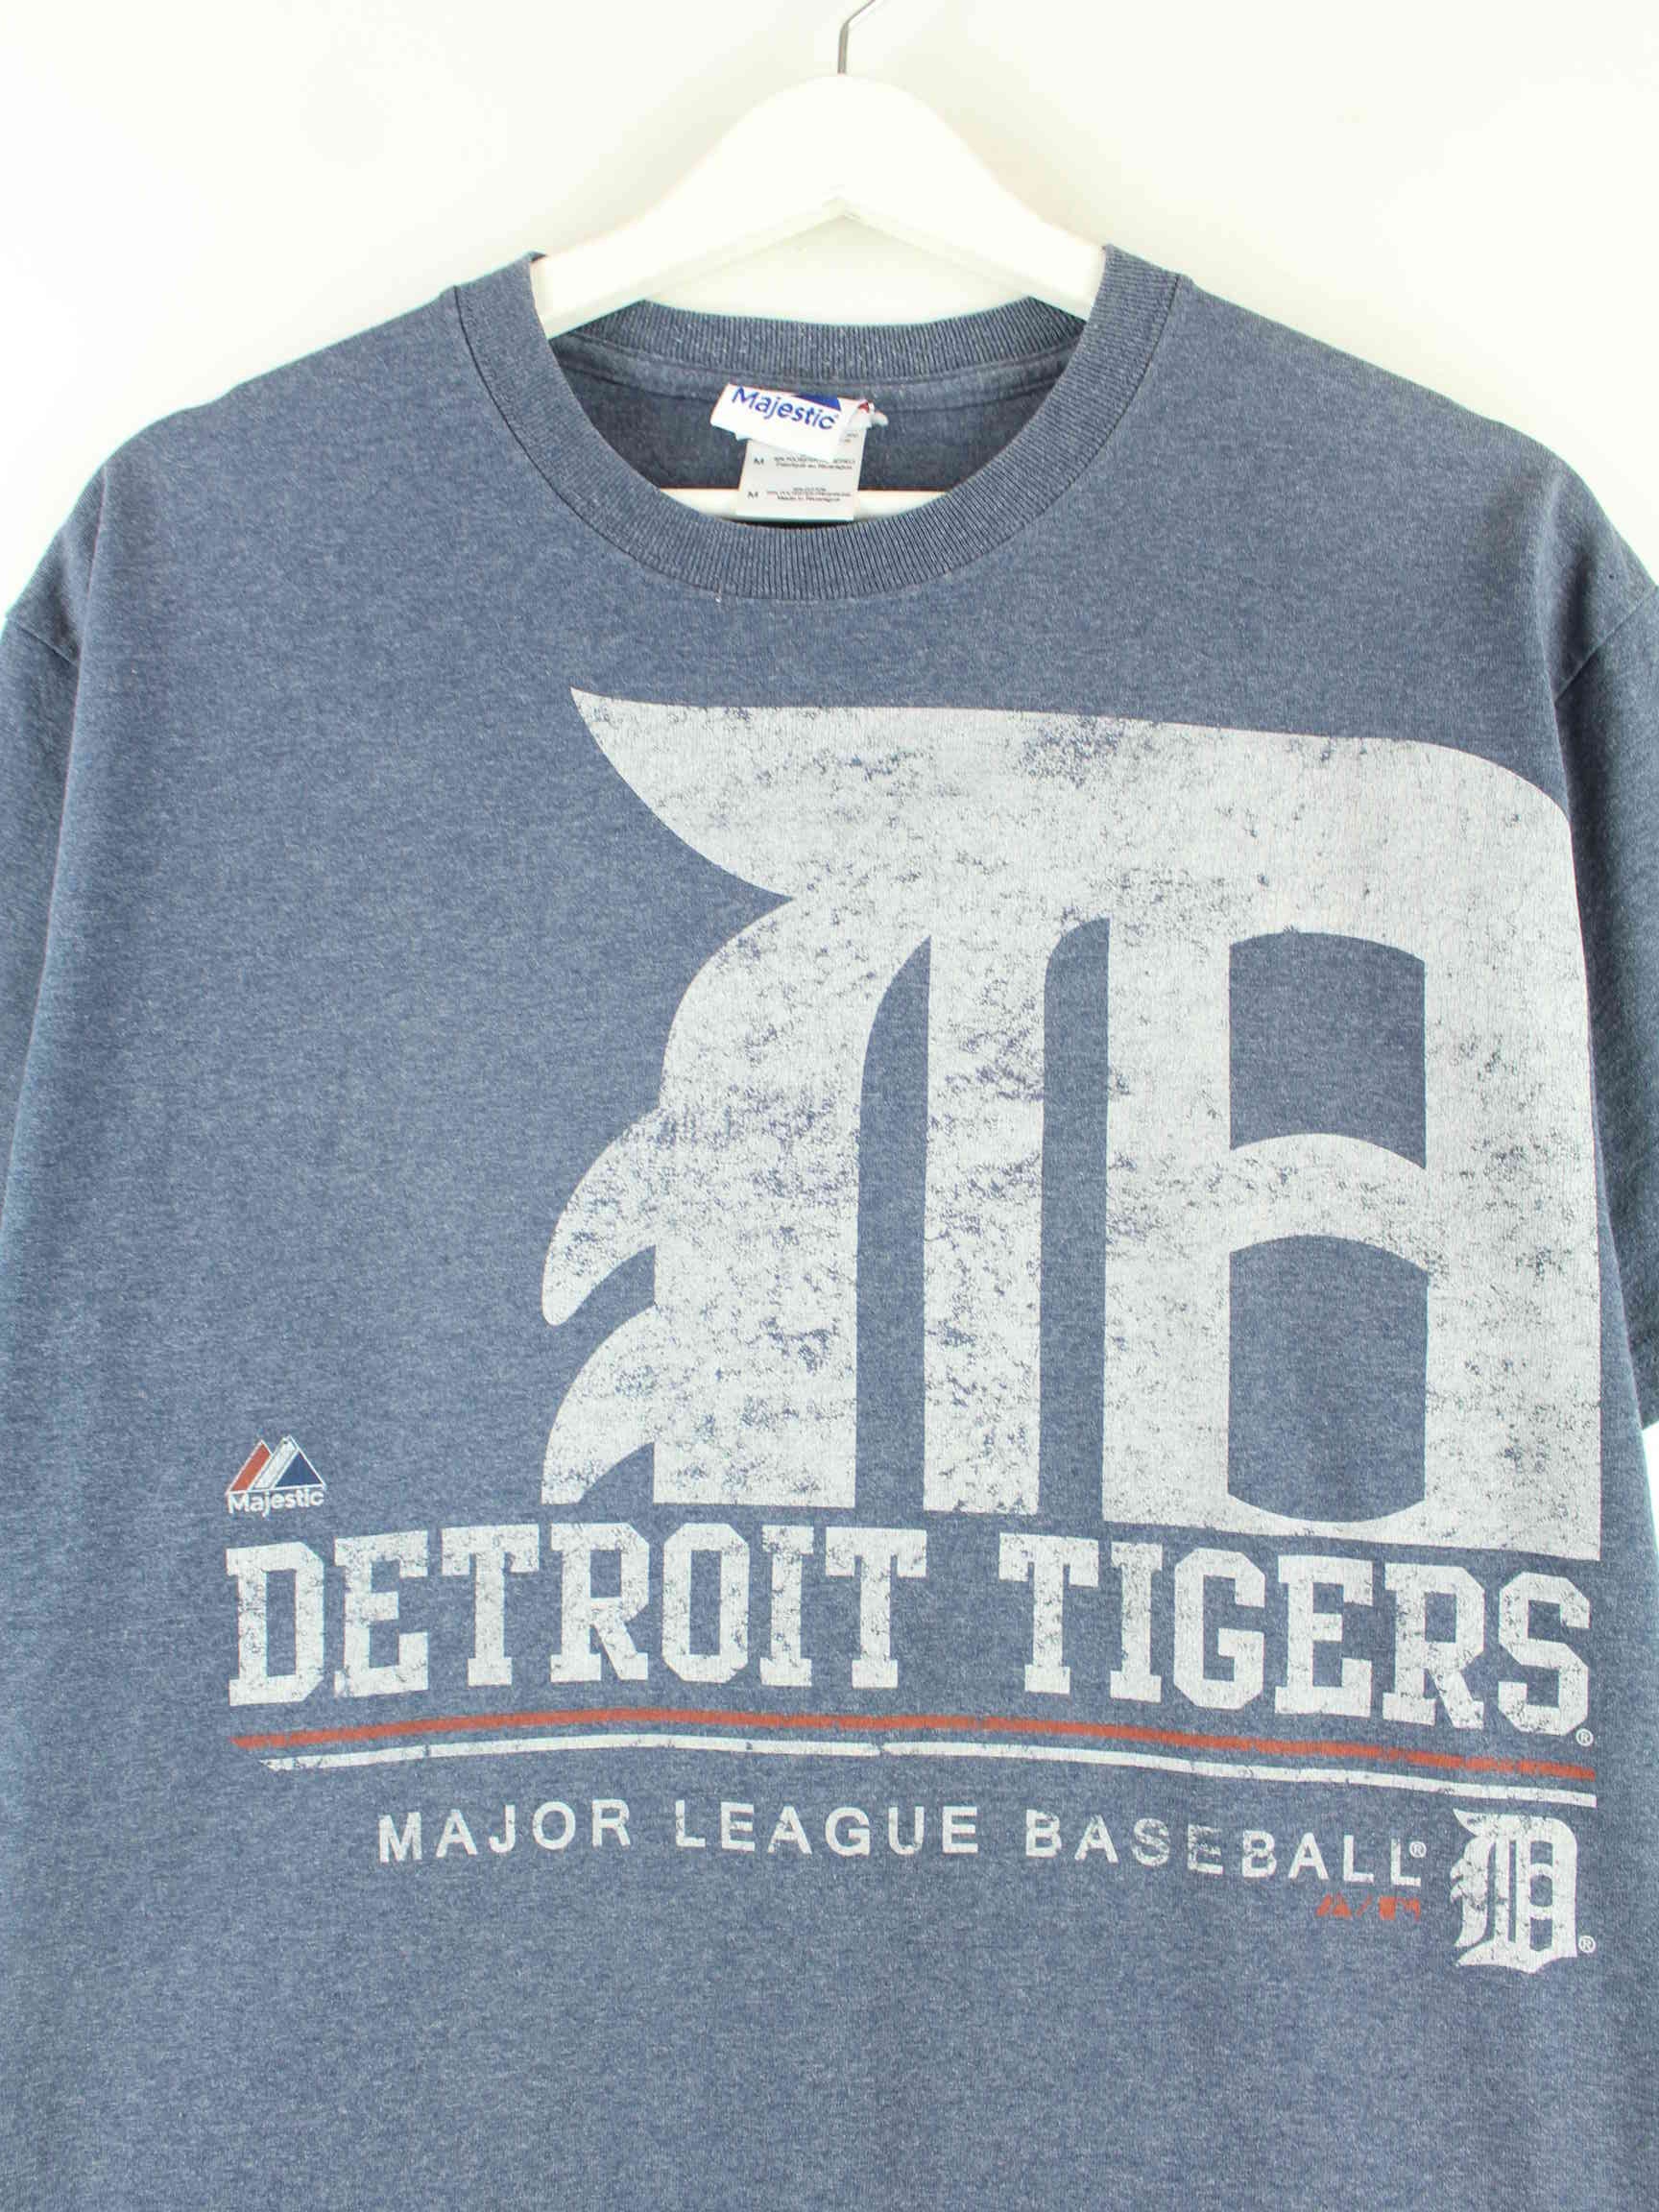 Majestic MLB 00s Detroit Tigers T-Shirt Blau M (detail image 1)